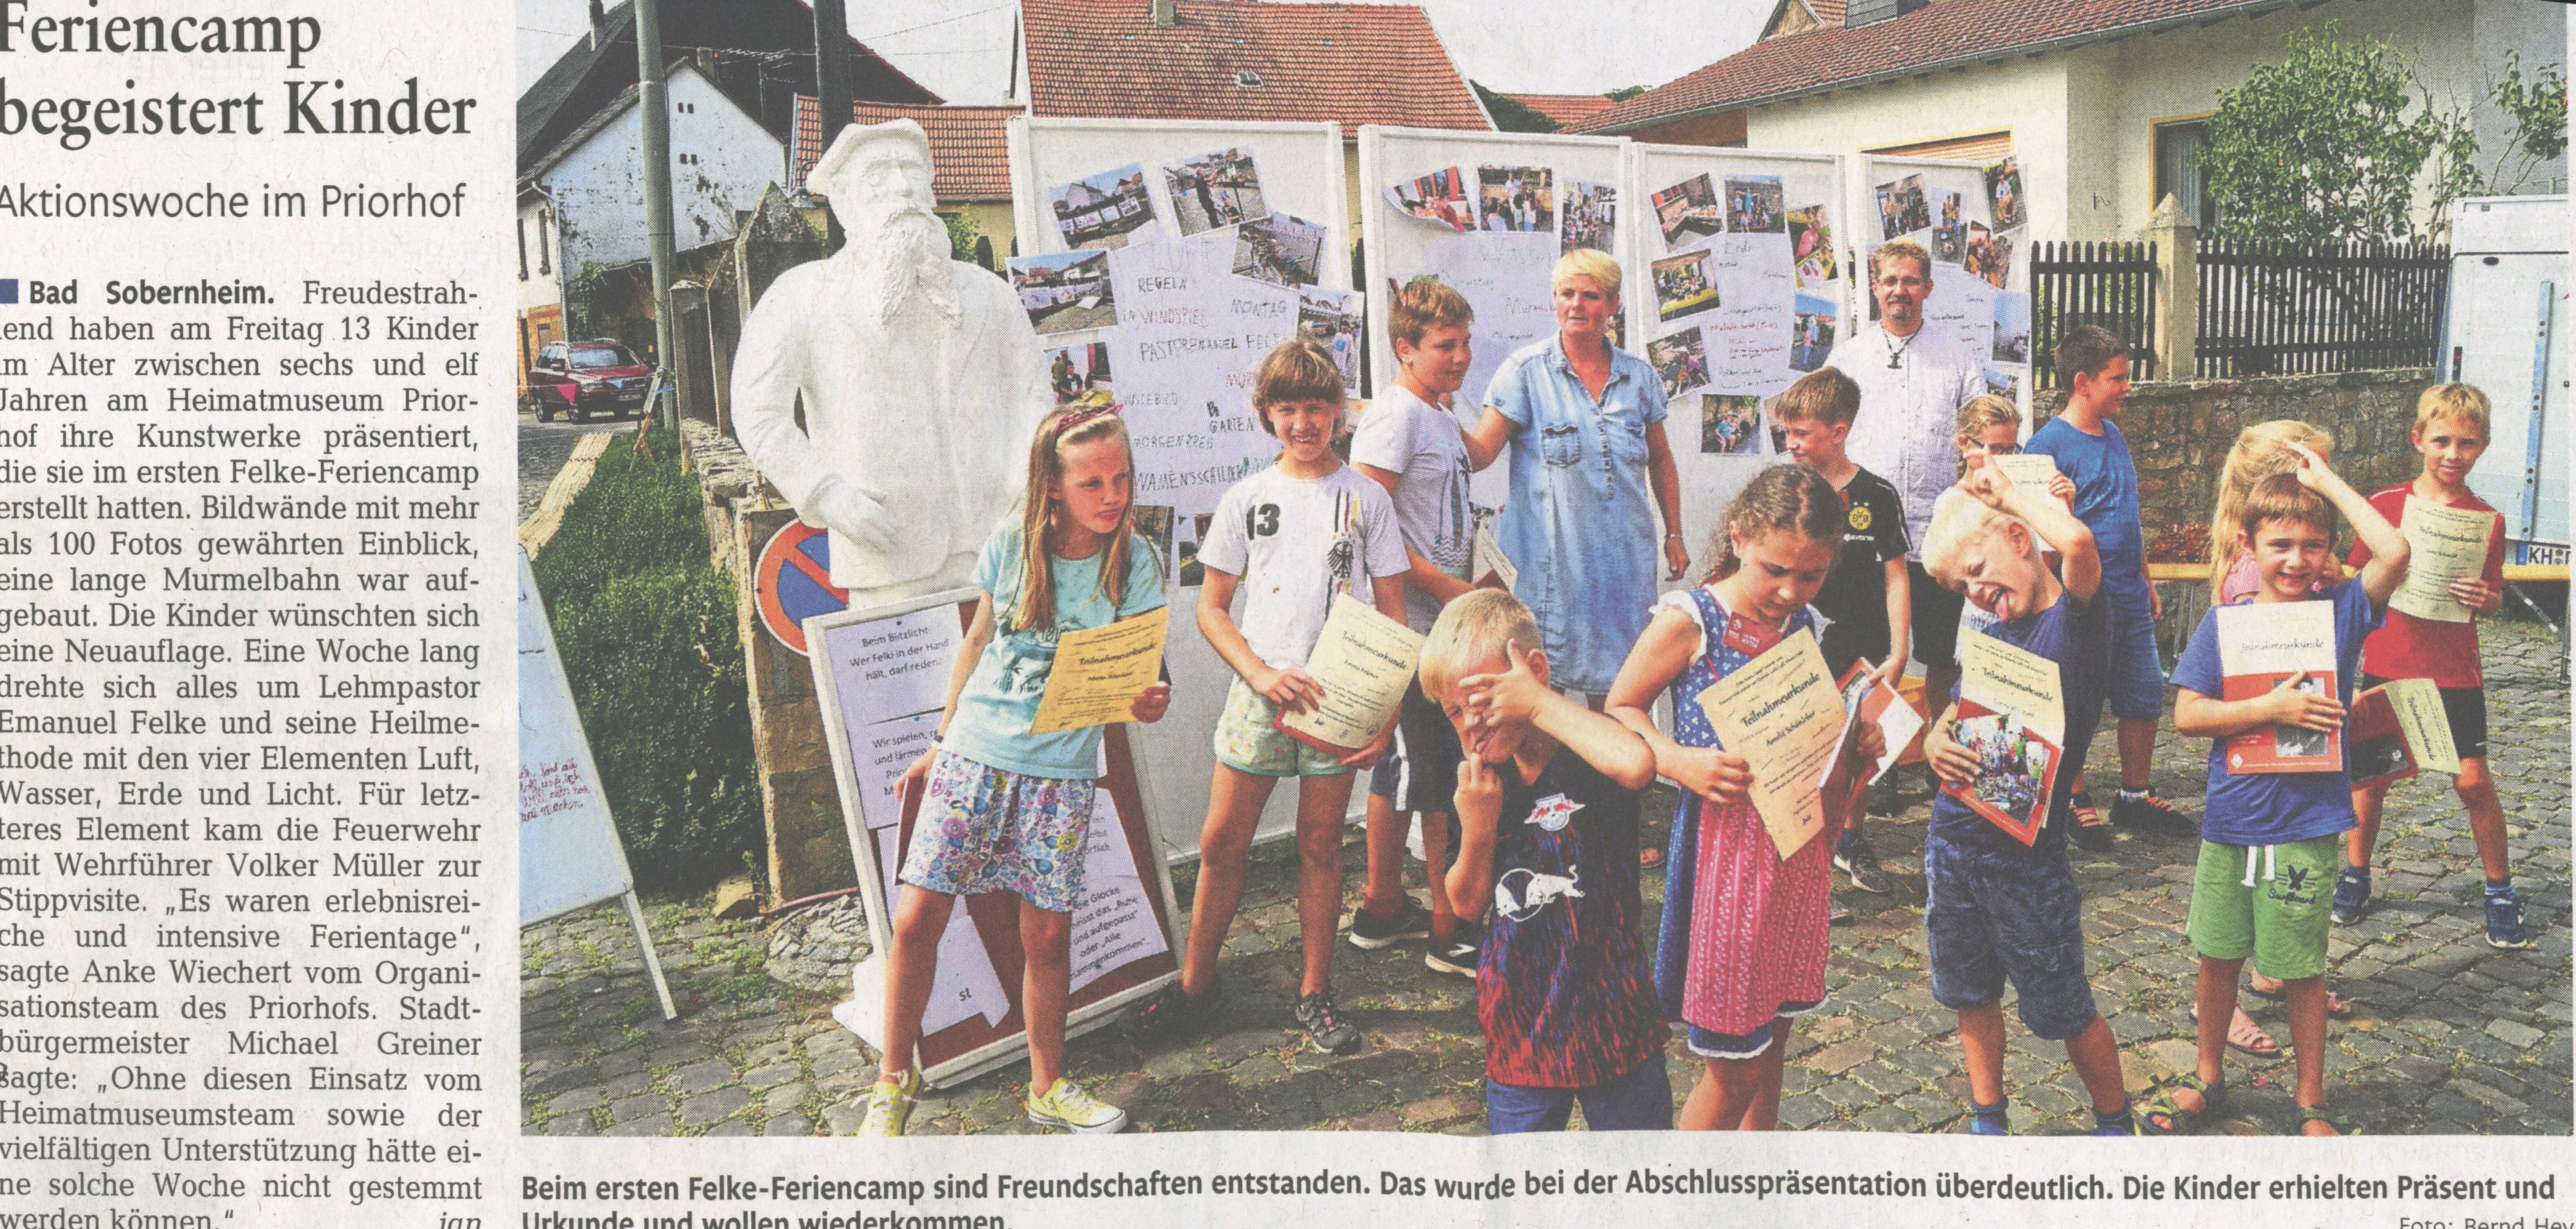 Feriencamp begeistert Kinder (Heimatmuseum Bad Sobernheim CC BY-NC-SA)